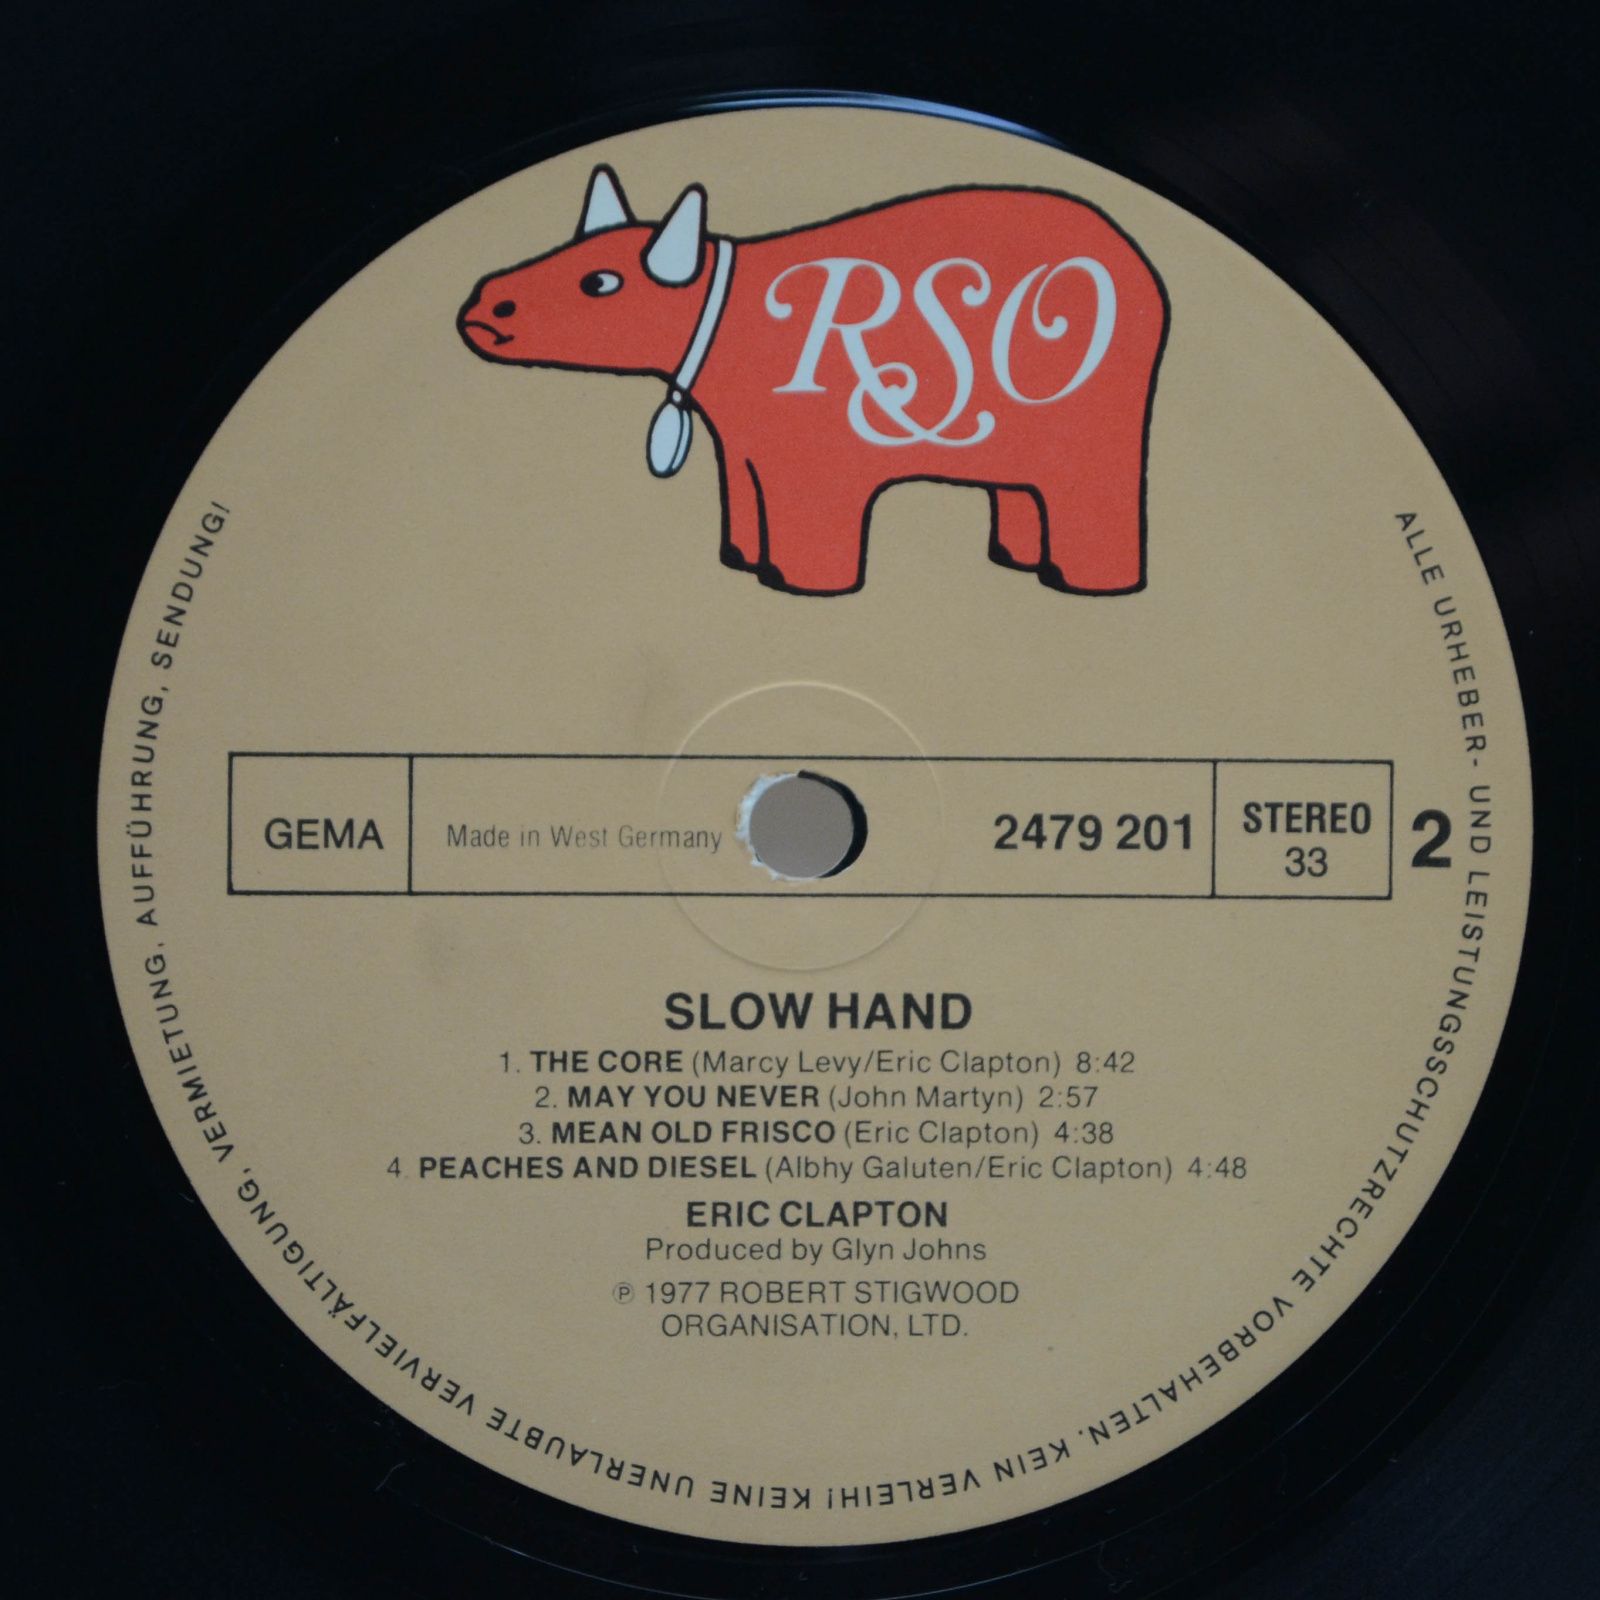 Eric Clapton — Slowhand, 1977